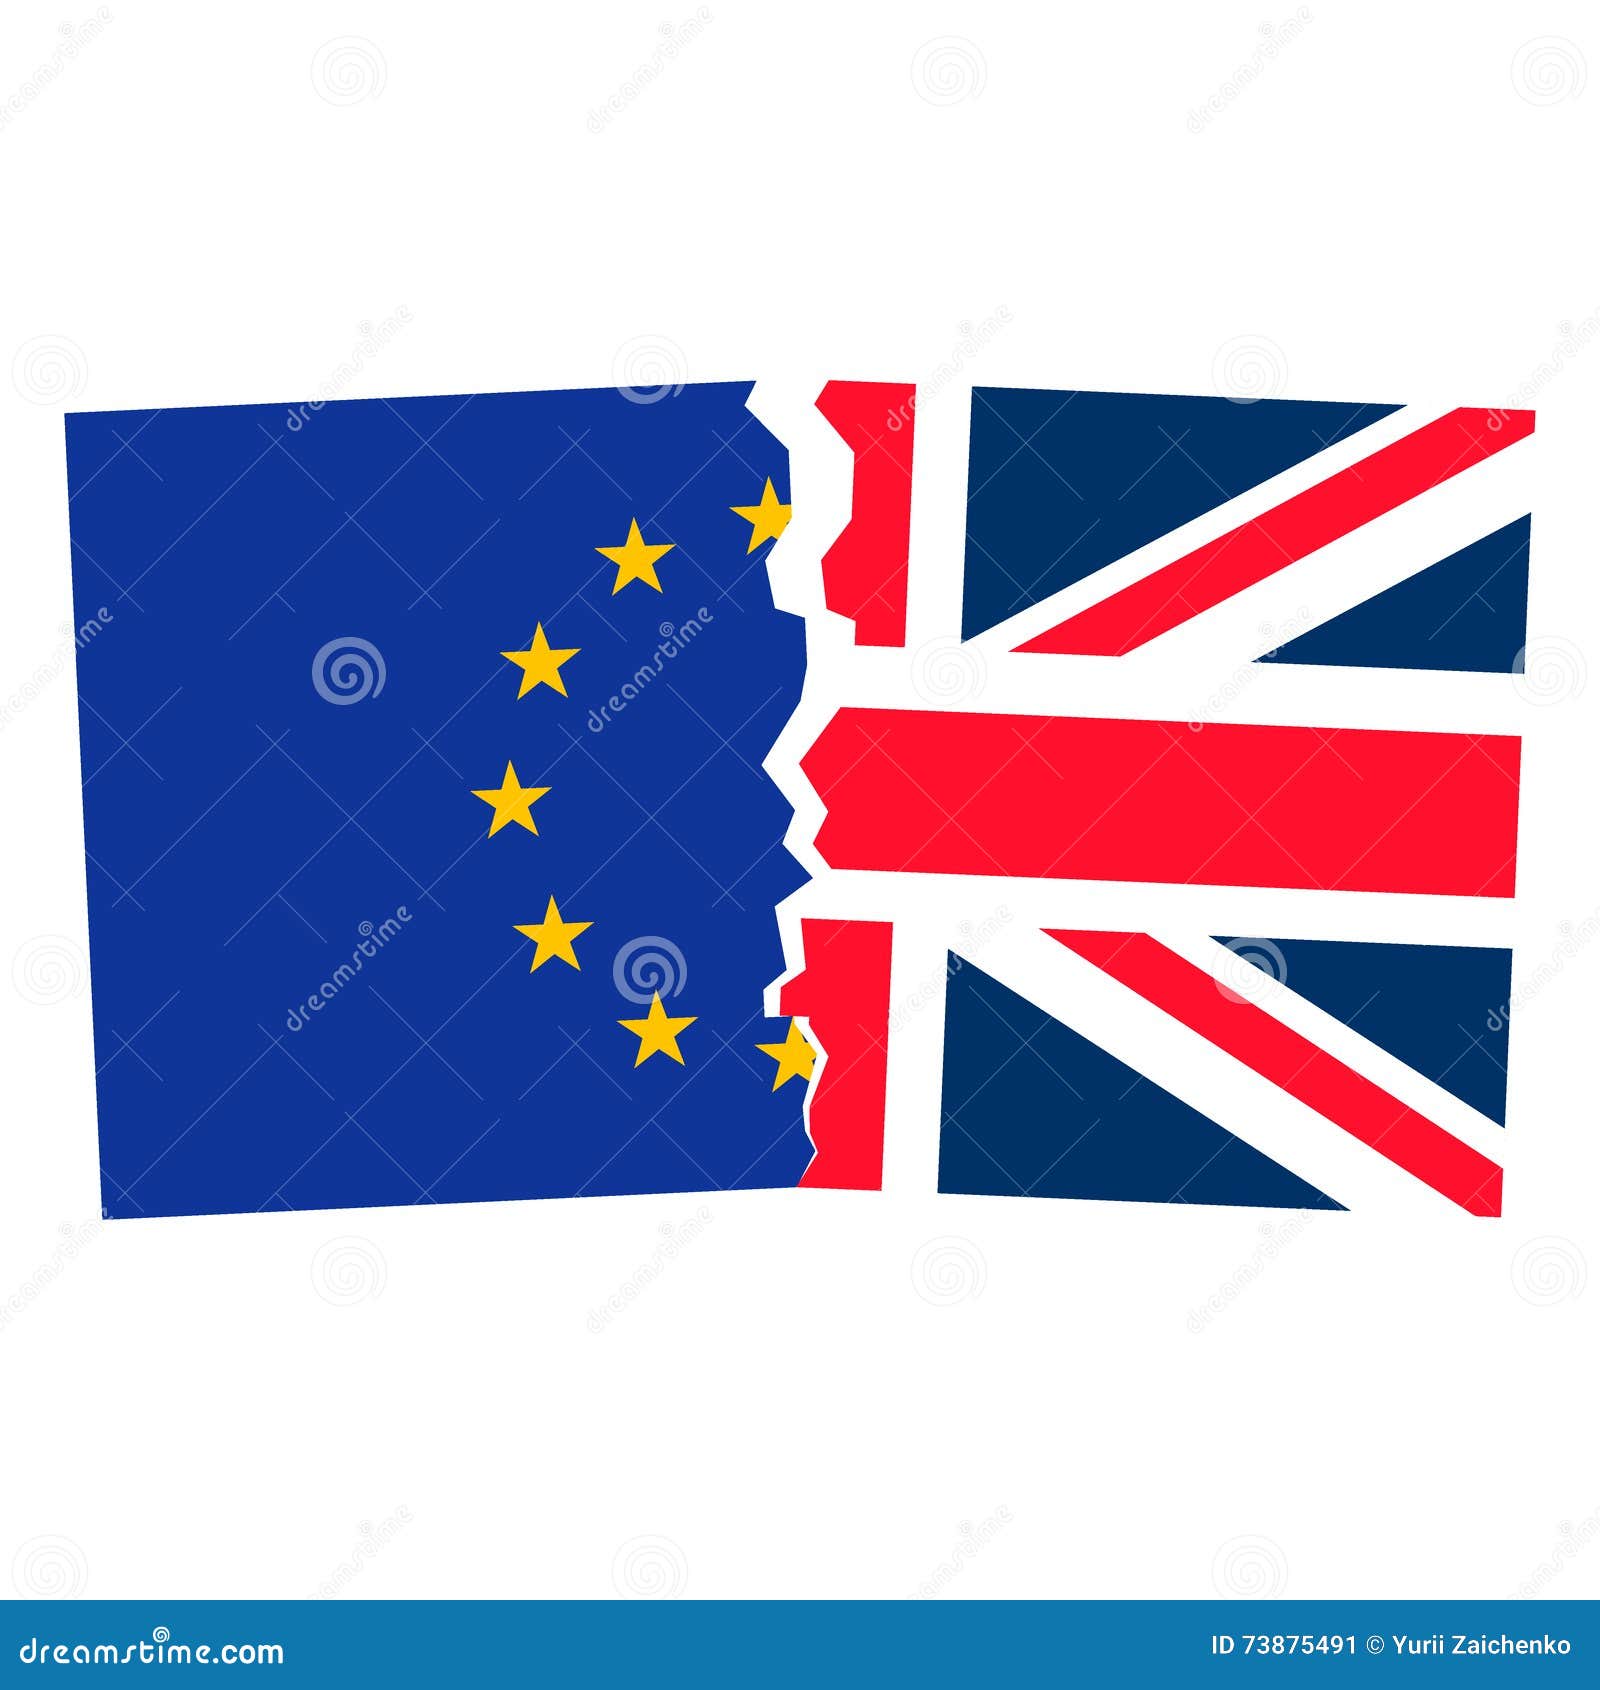 EU Union Jack Flag Fridge Magnet Brexit European Union British UK Gift #8430